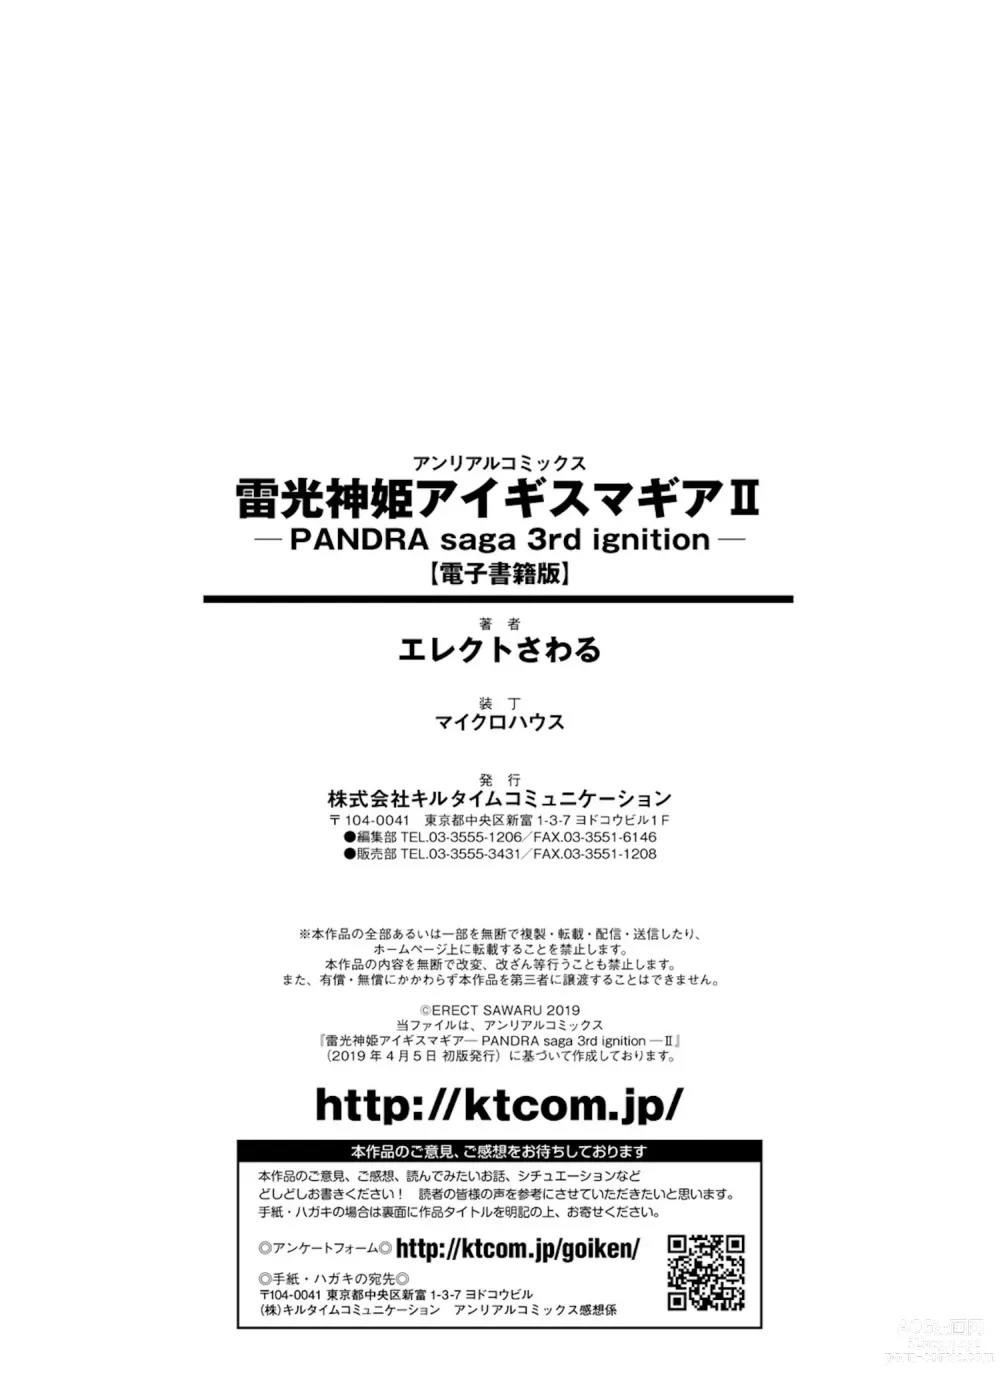 Page 207 of manga Raikou Shinki Igis Magia II -PANDRA saga 3rd ignition-